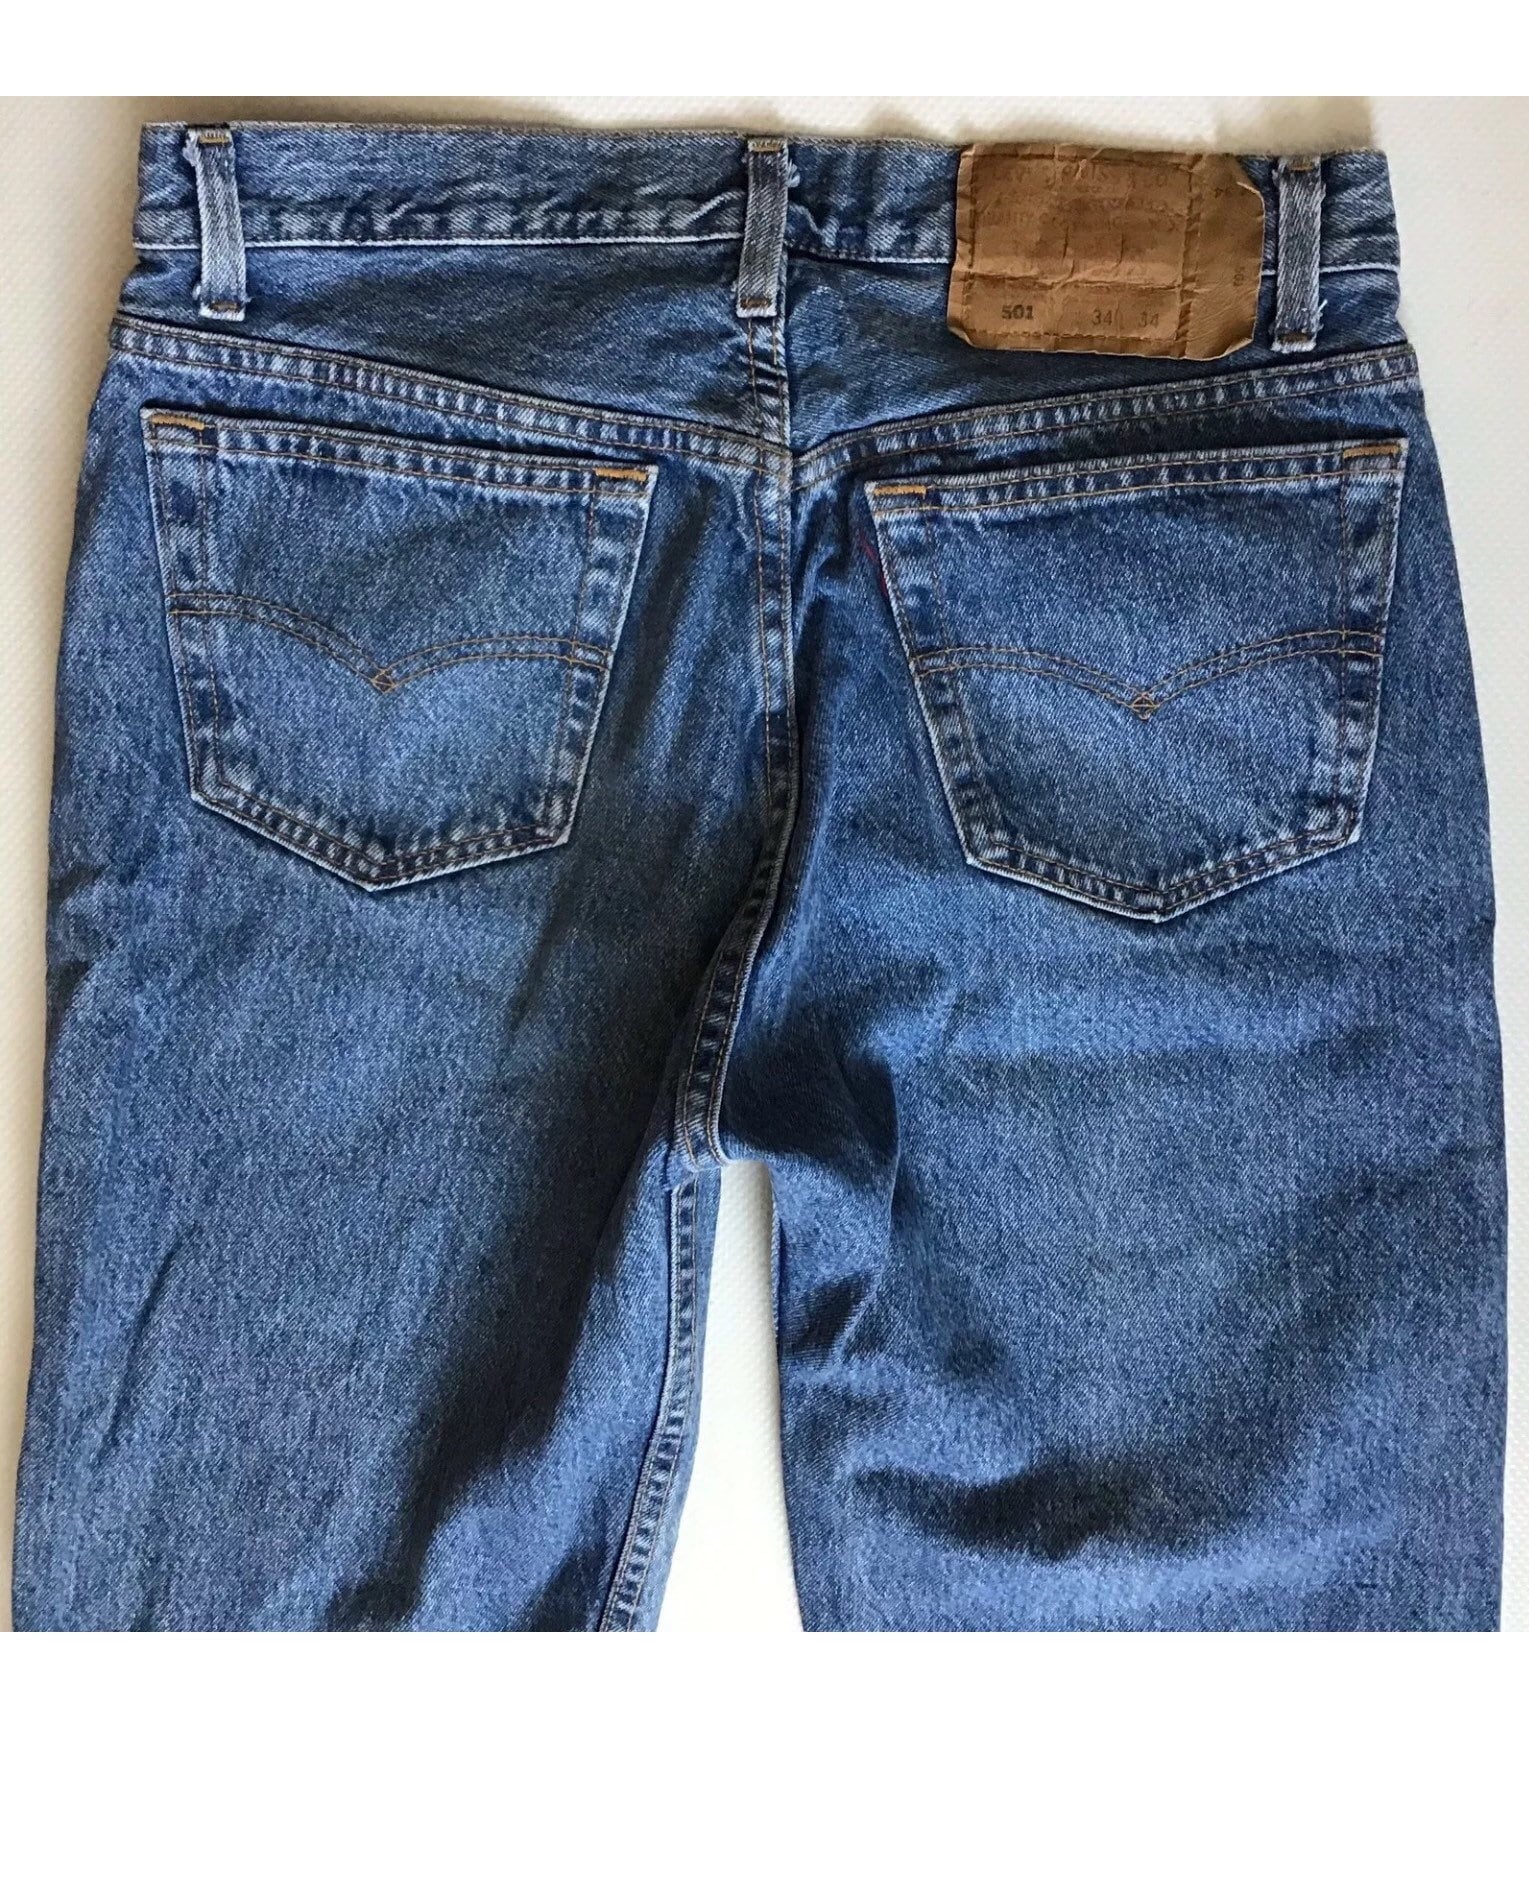 Mens Levis 591 retro straight leg blue jeans W30 L34 | Etsy